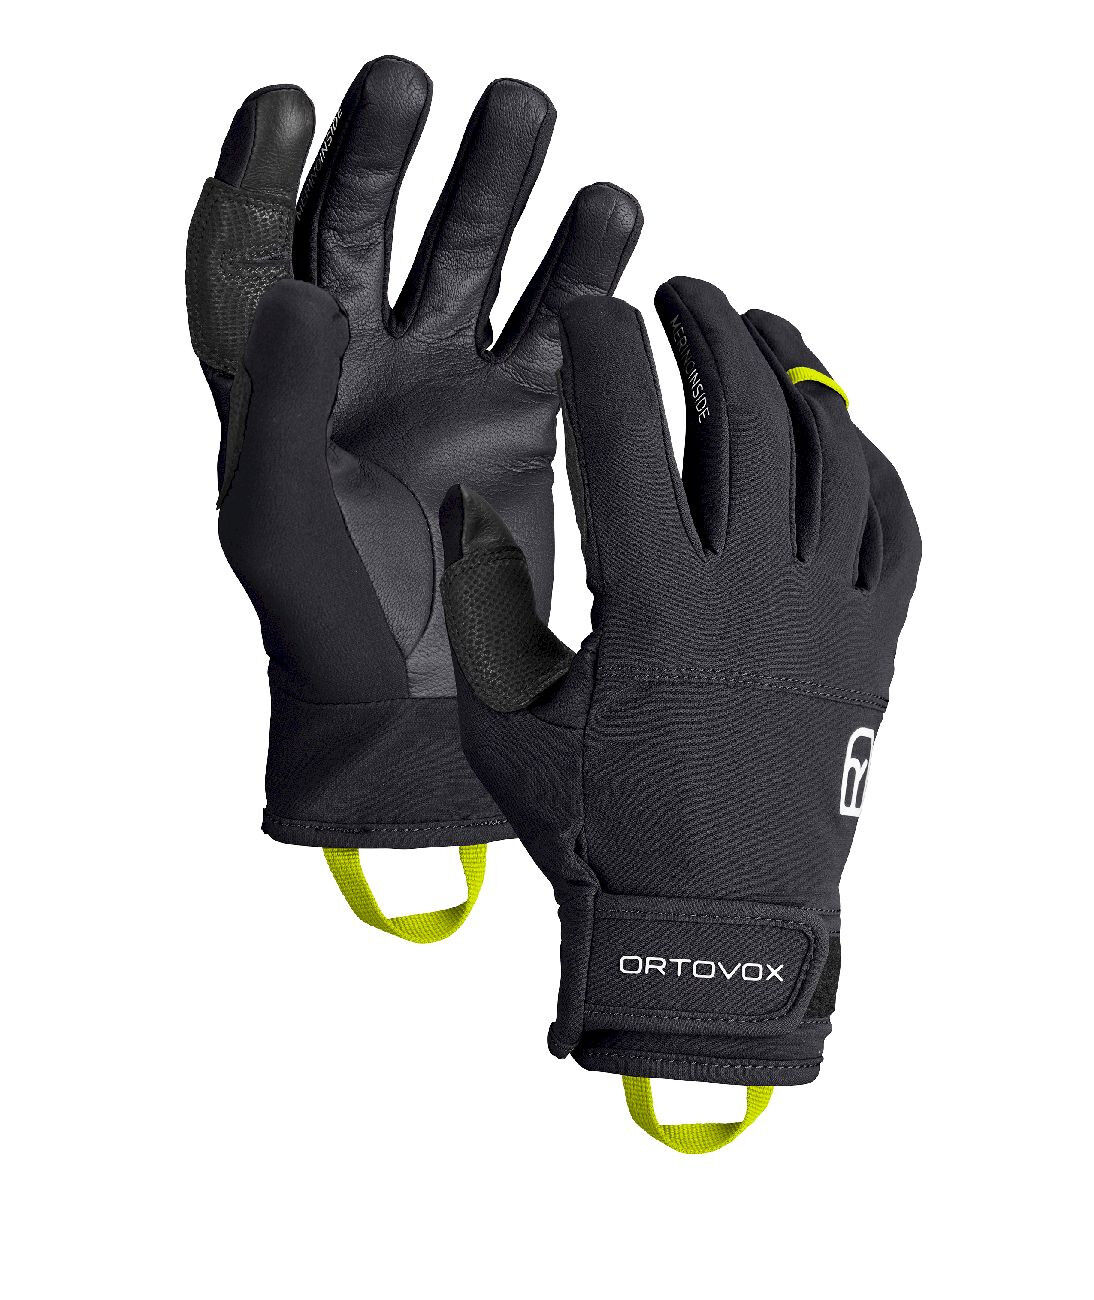 Ortovox Tour Light Glove - Guanti da sci - Uomo